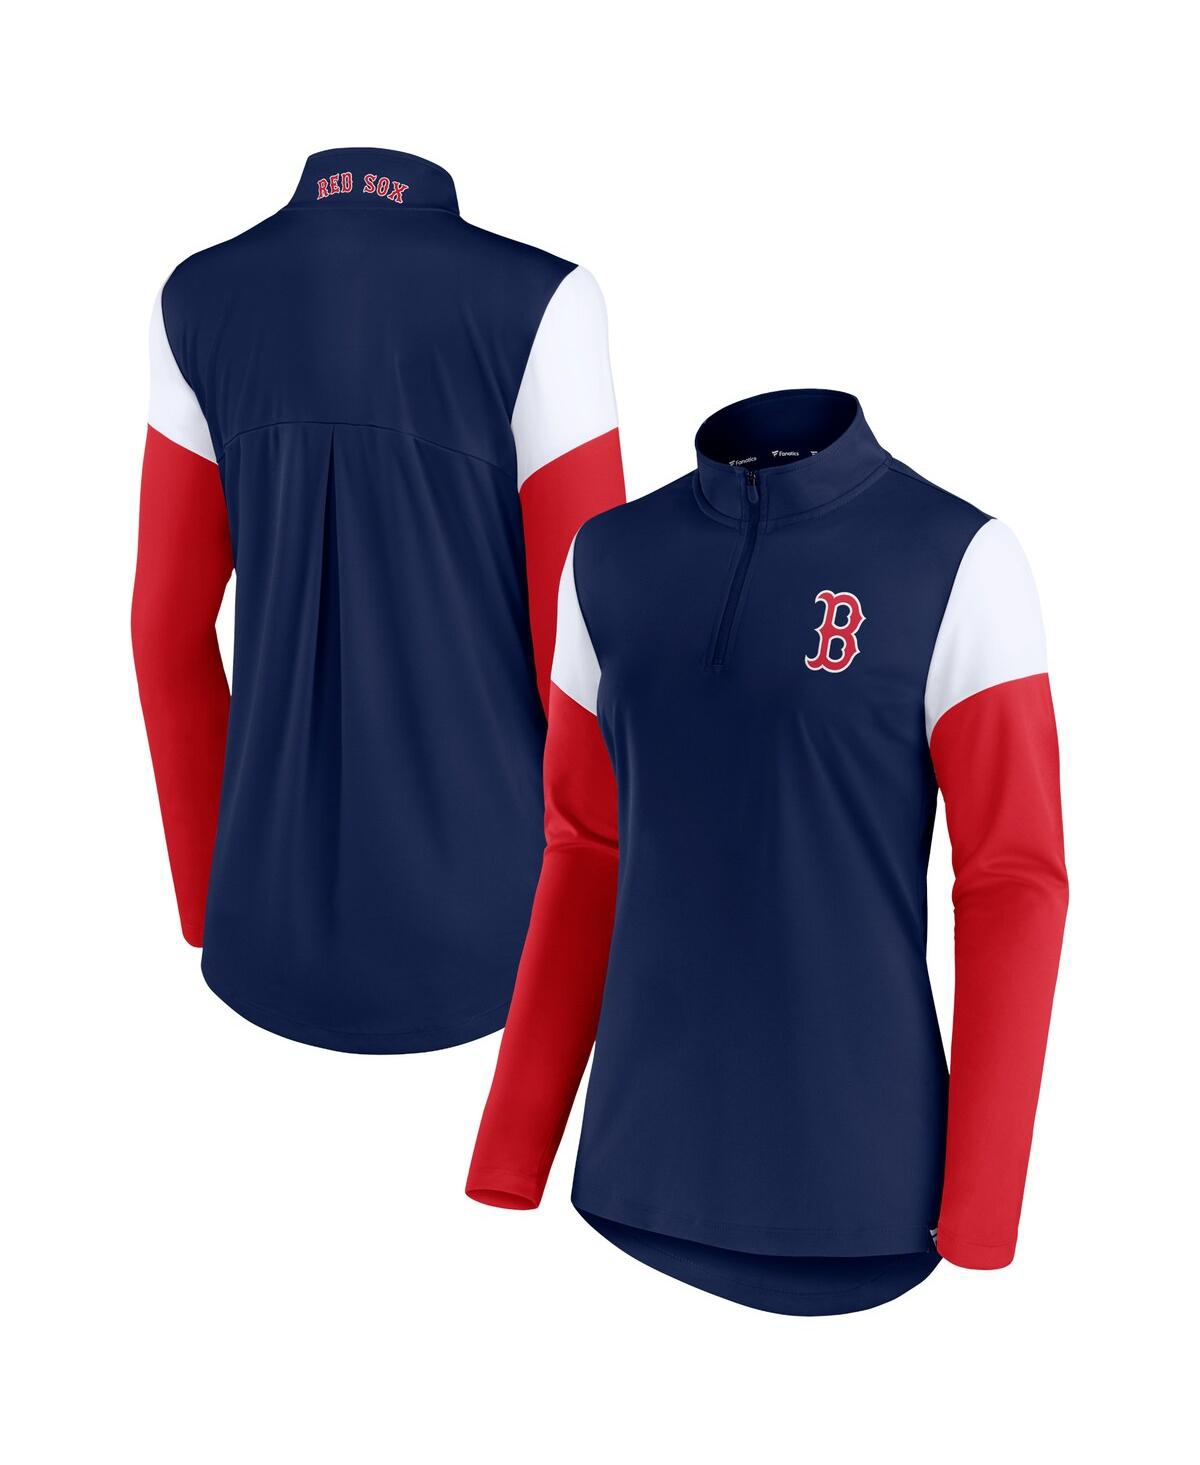 Women's Fanatics Navy and Red Boston Red Sox Authentic Fleece Quarter-Zip Jacket - Navy, Red